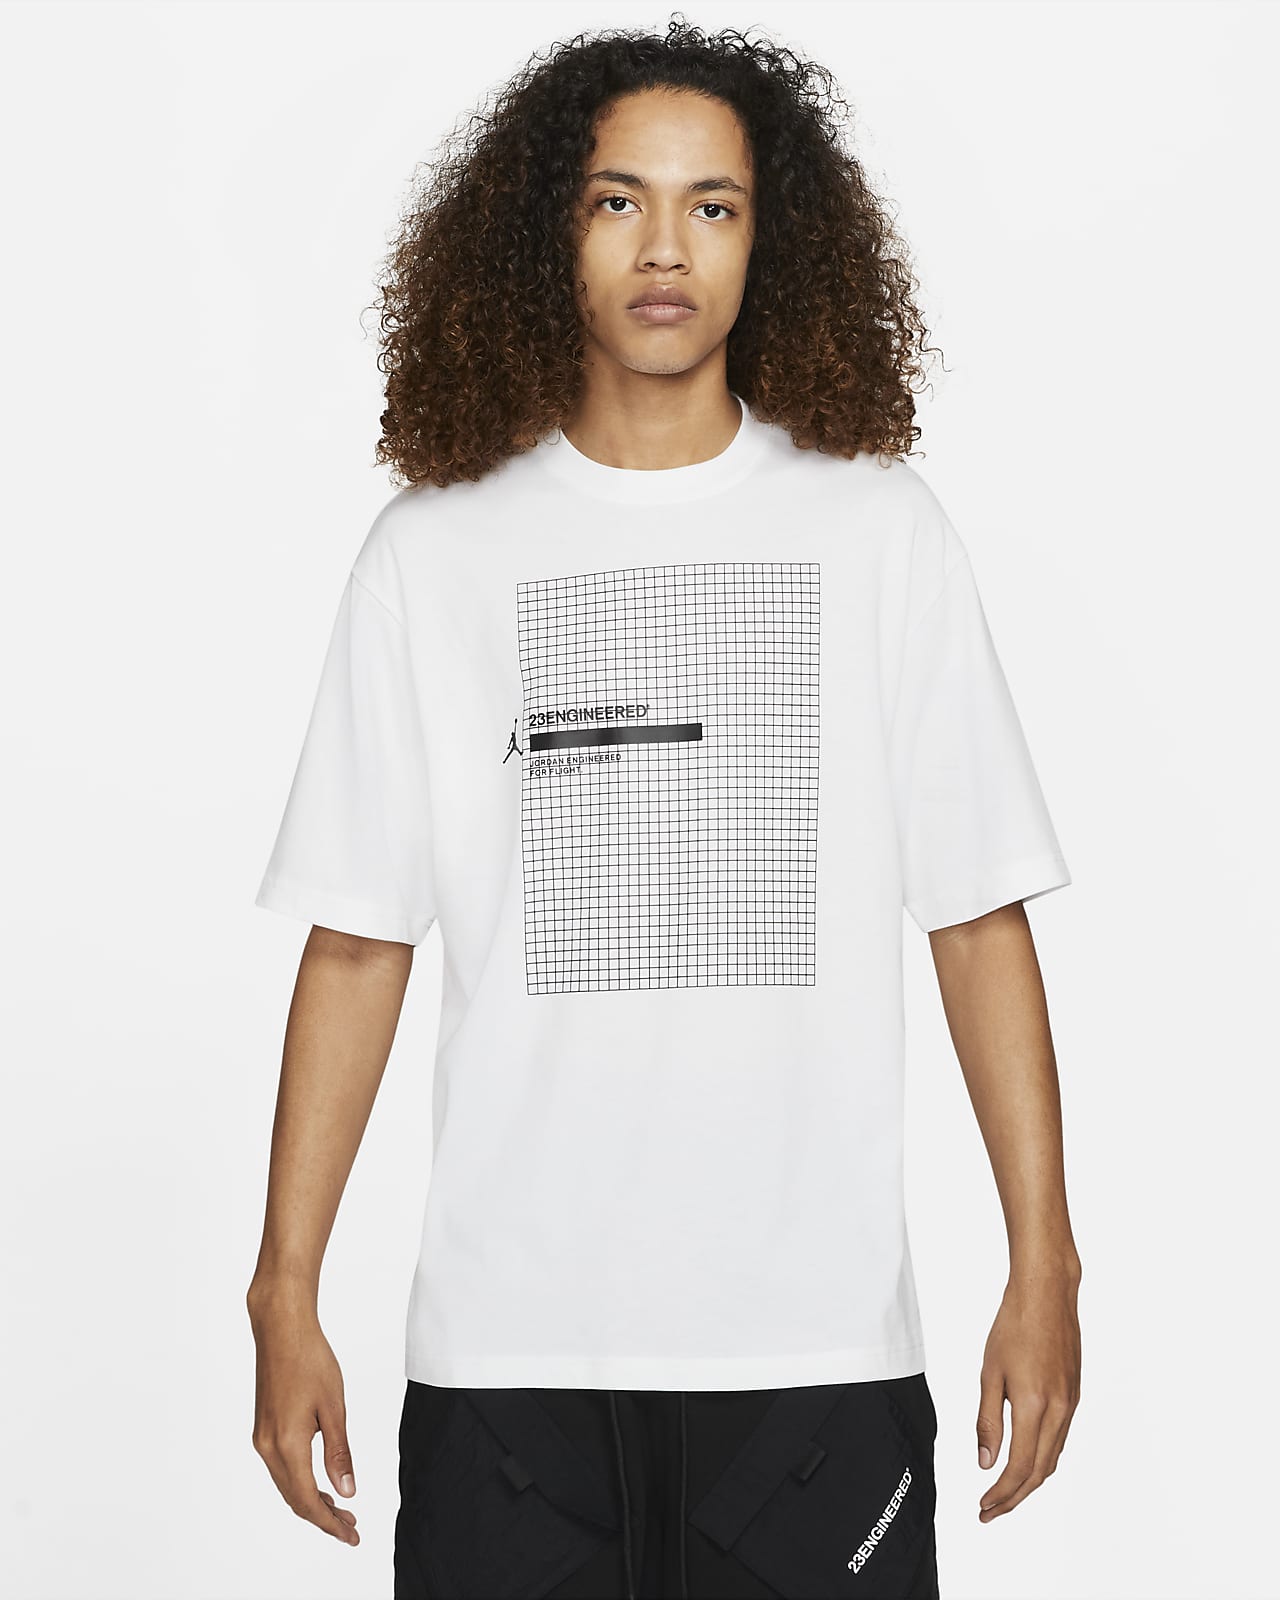 Tee-shirt à manches courtes Jordan 23 Engineered pour Homme